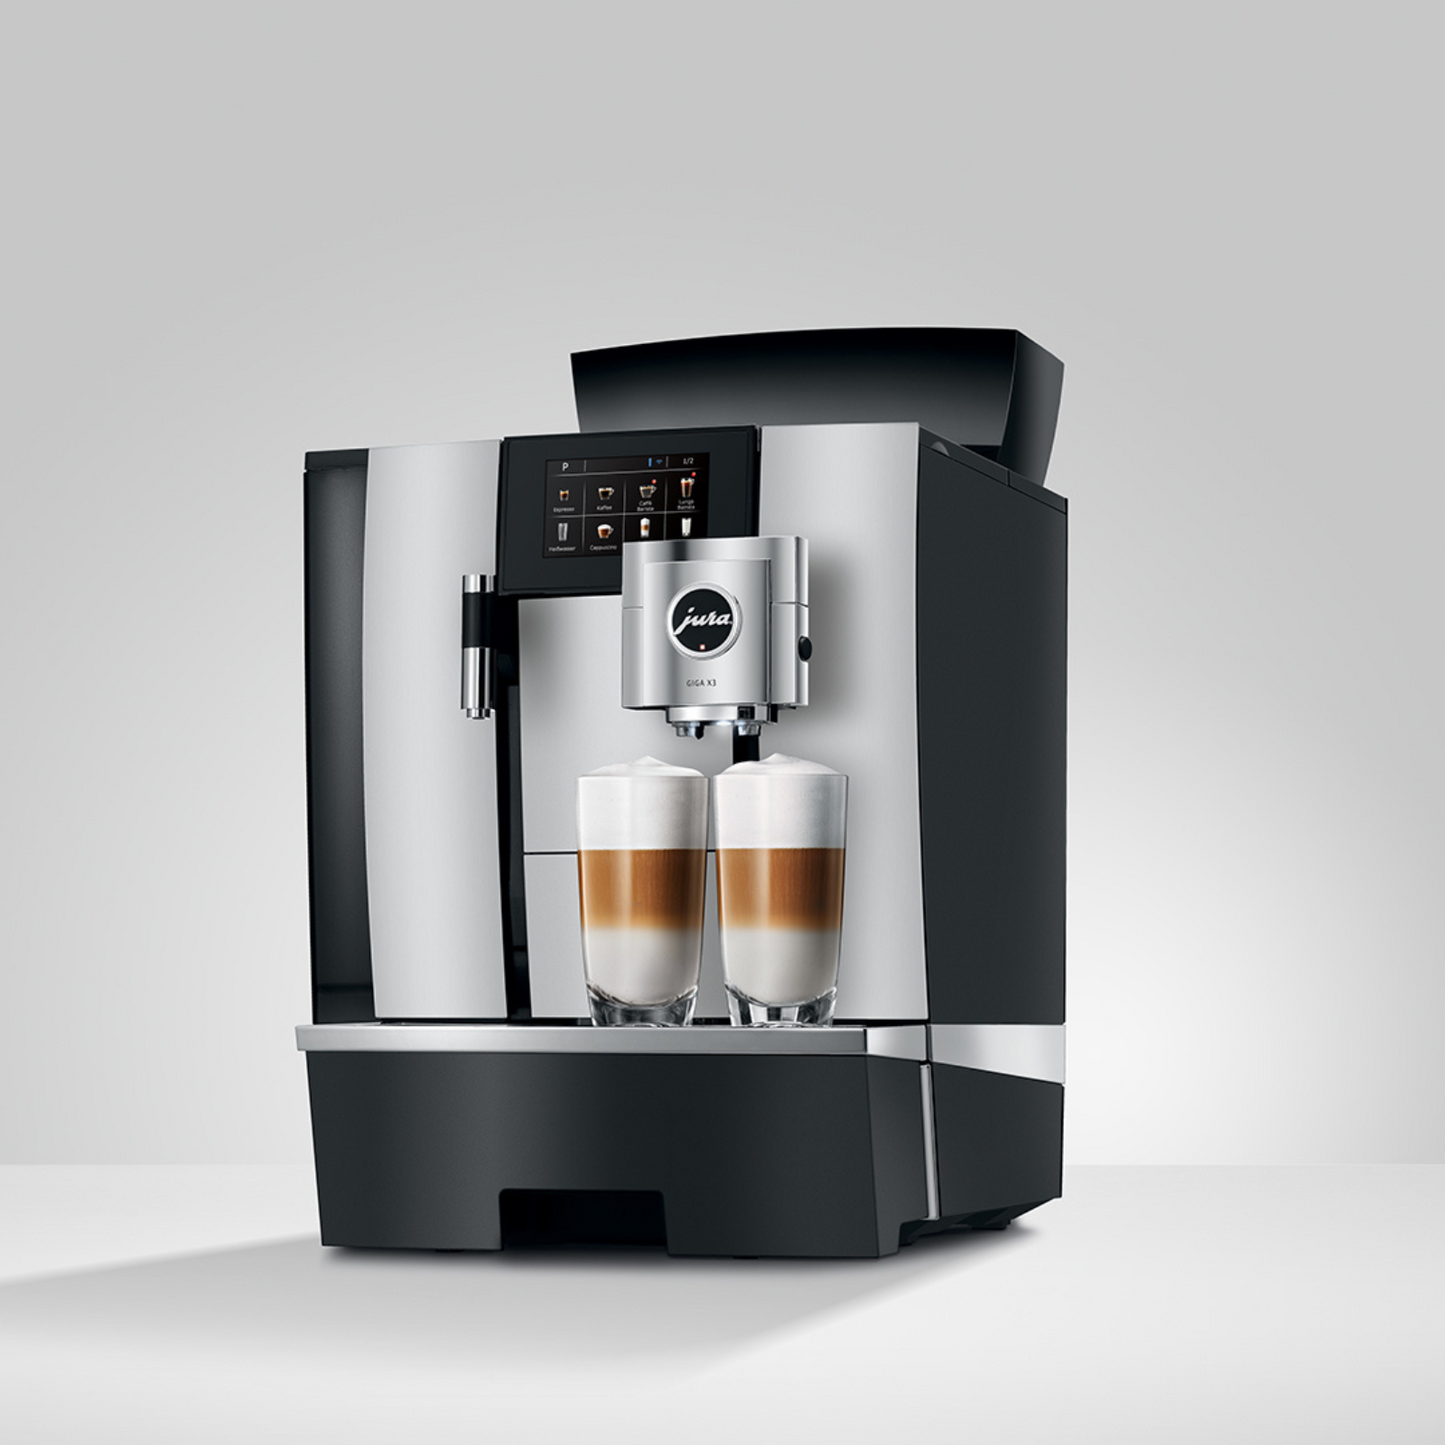 Jura Professional Coffee Machines